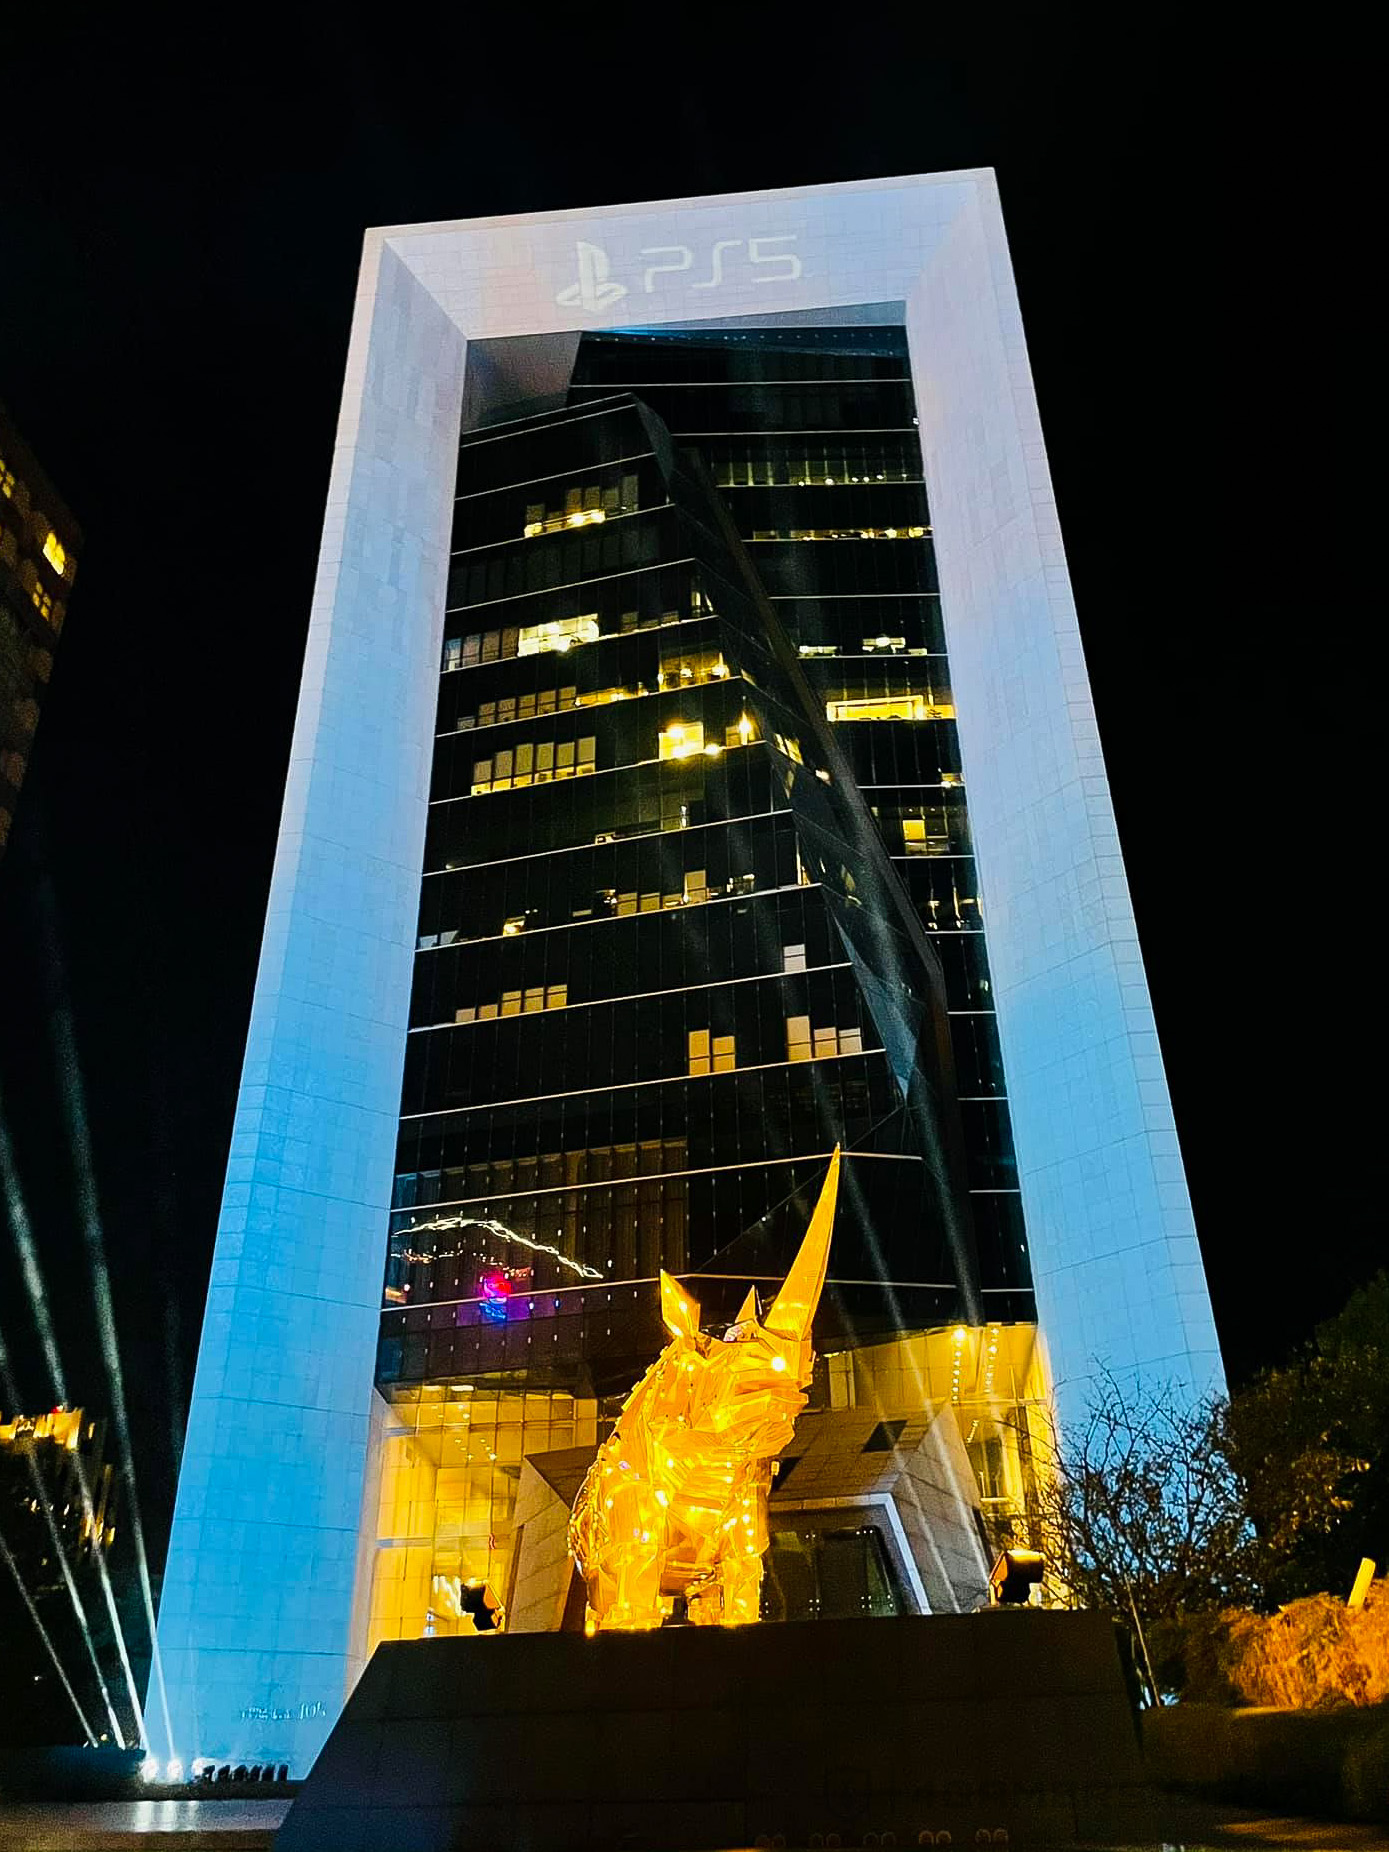 PS5台湾发售 索尼在商业街亮起超大广告霓虹灯